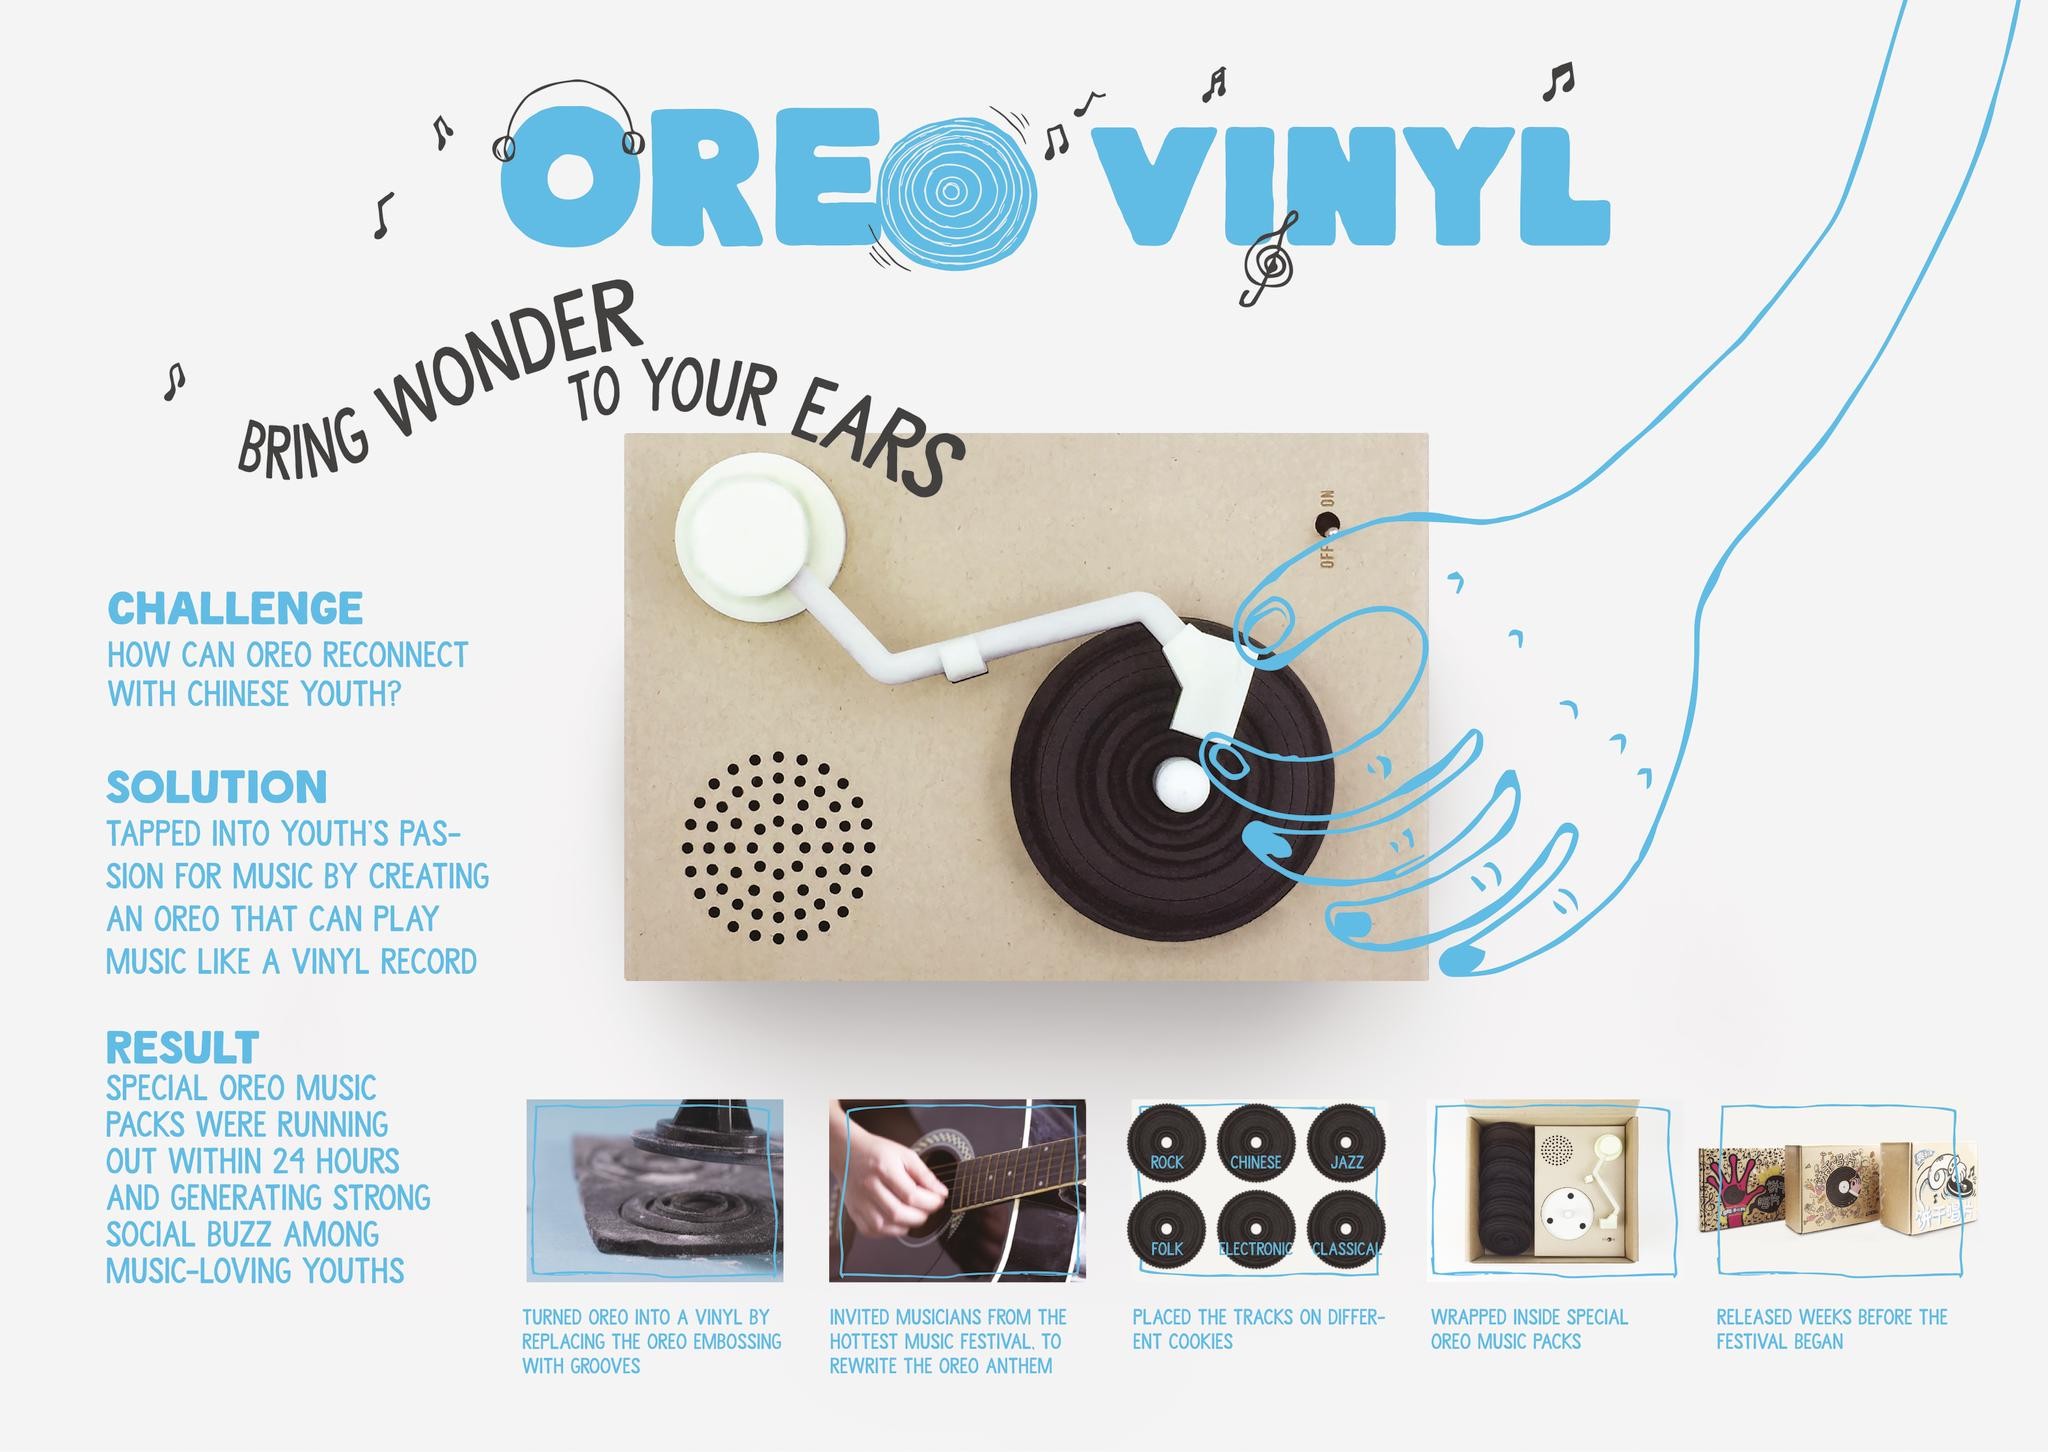 Oreo Vinyl